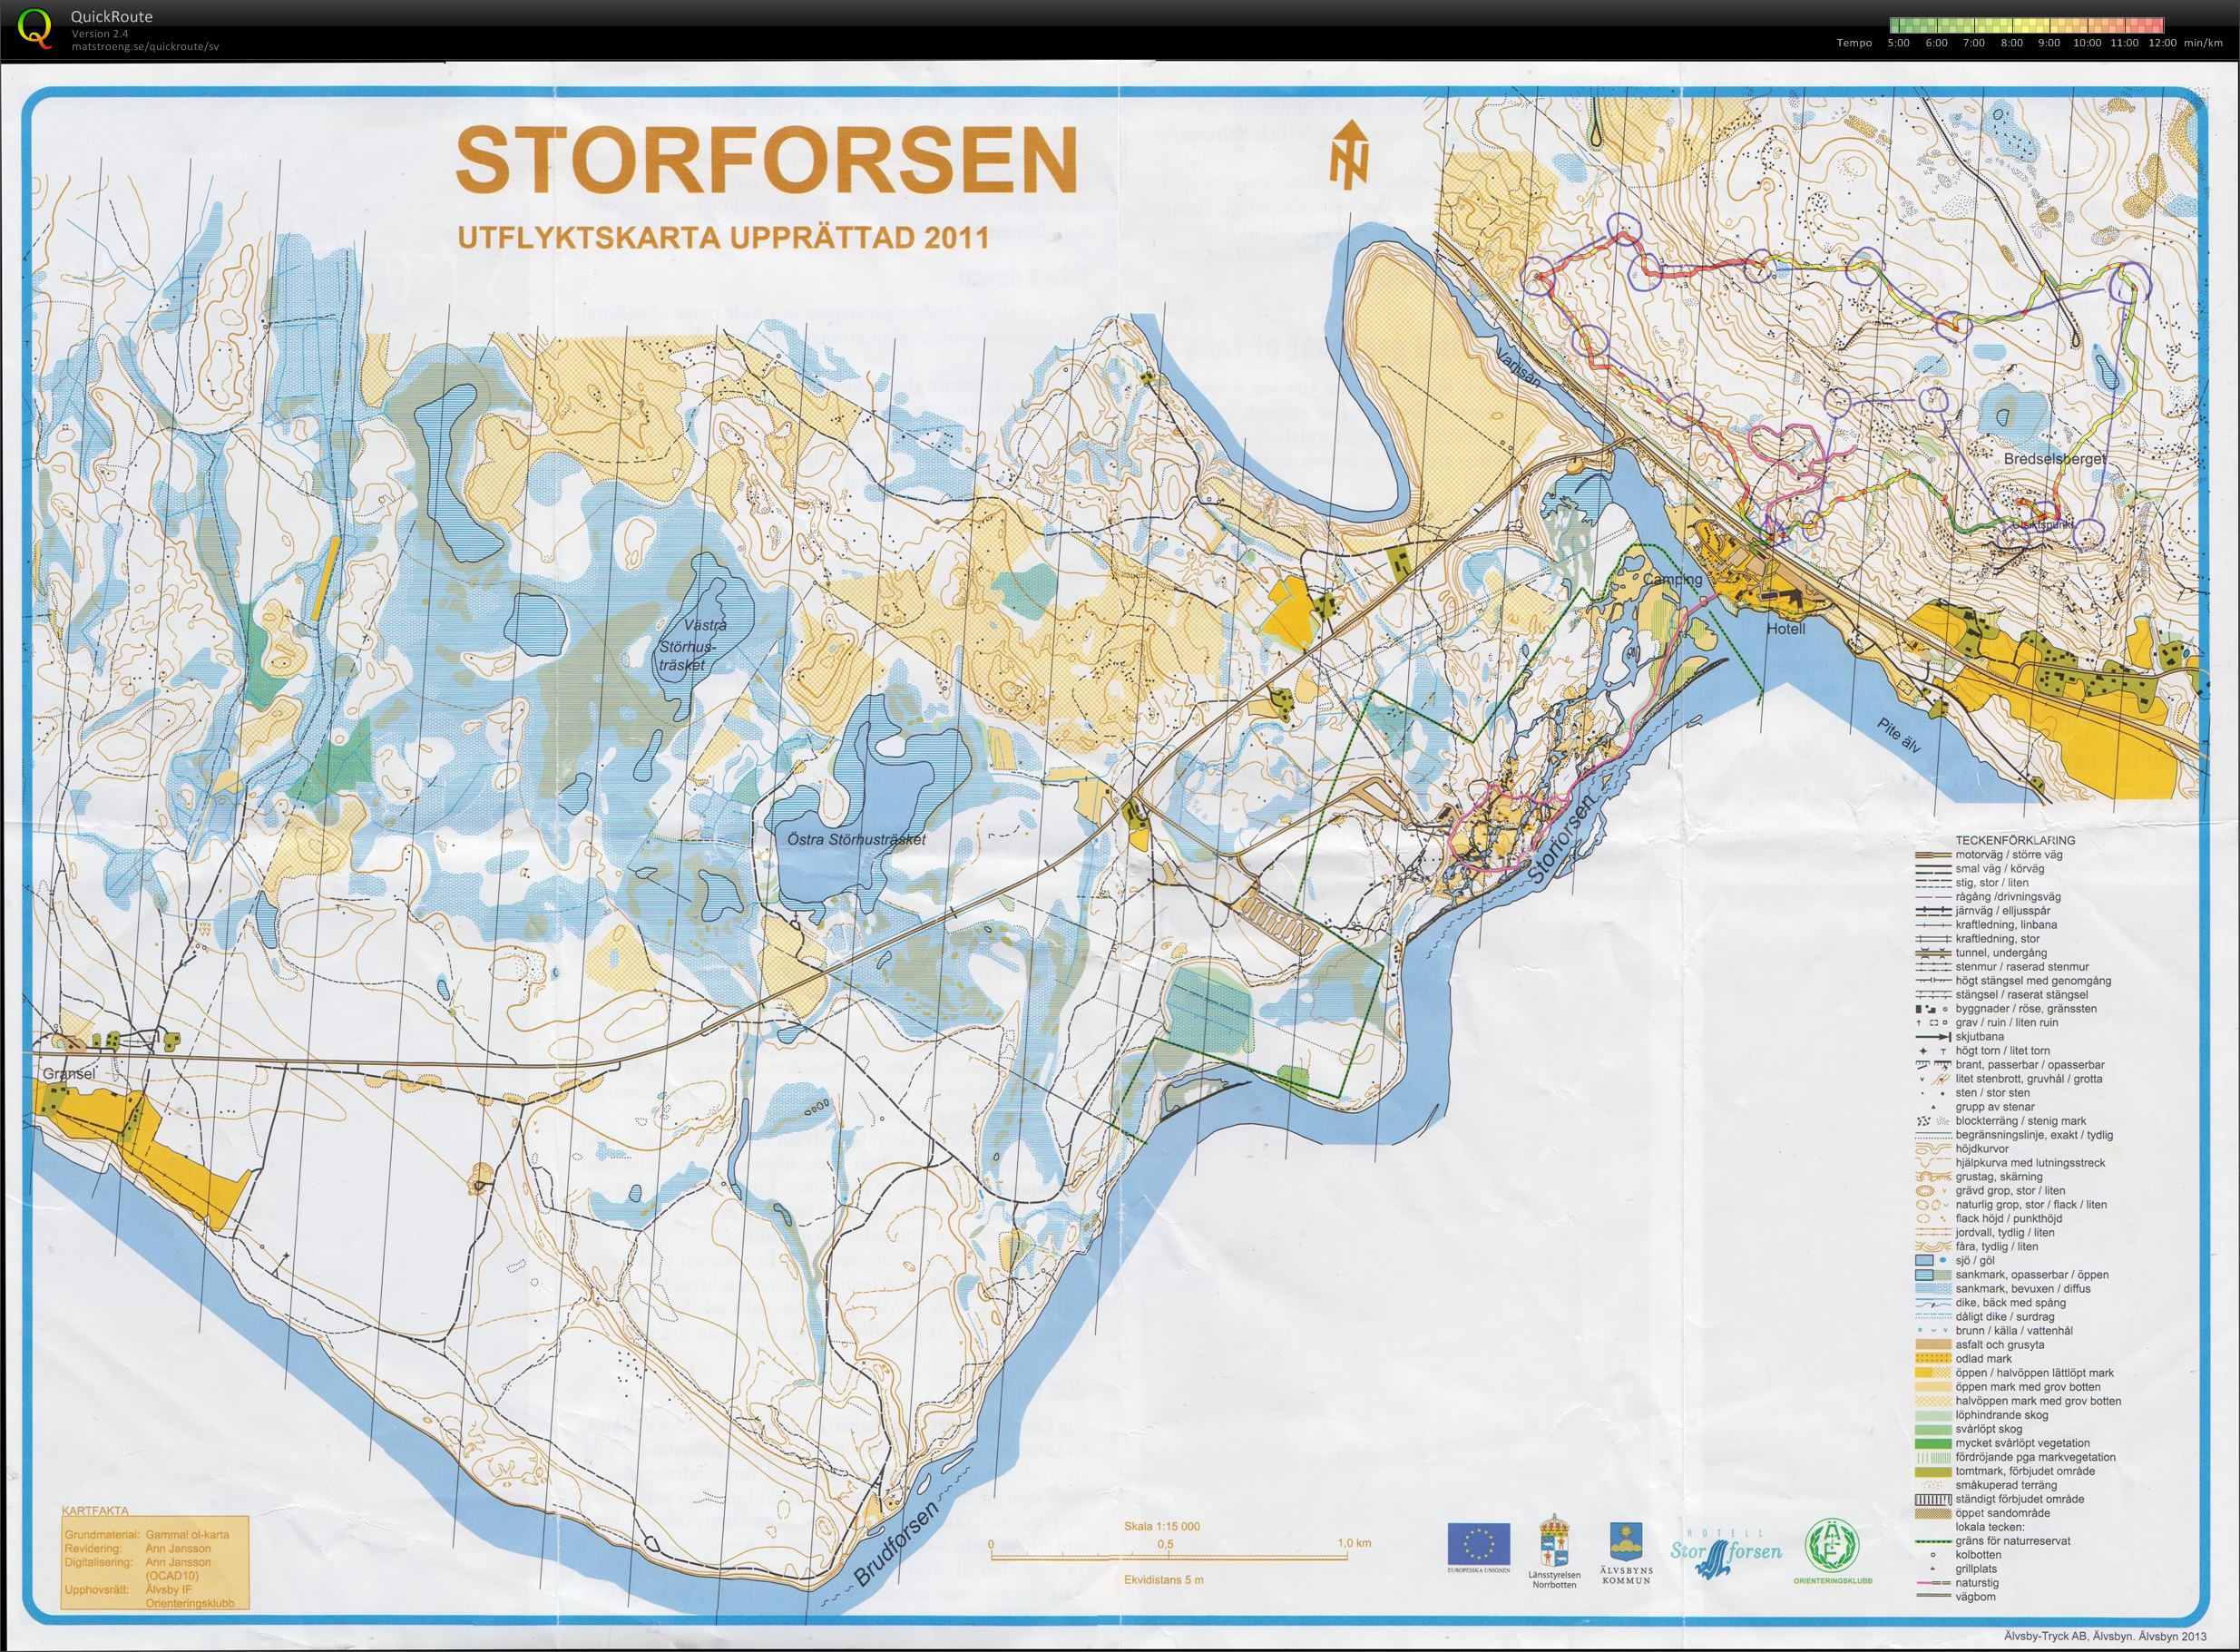 Storforsen (06-07-2015)